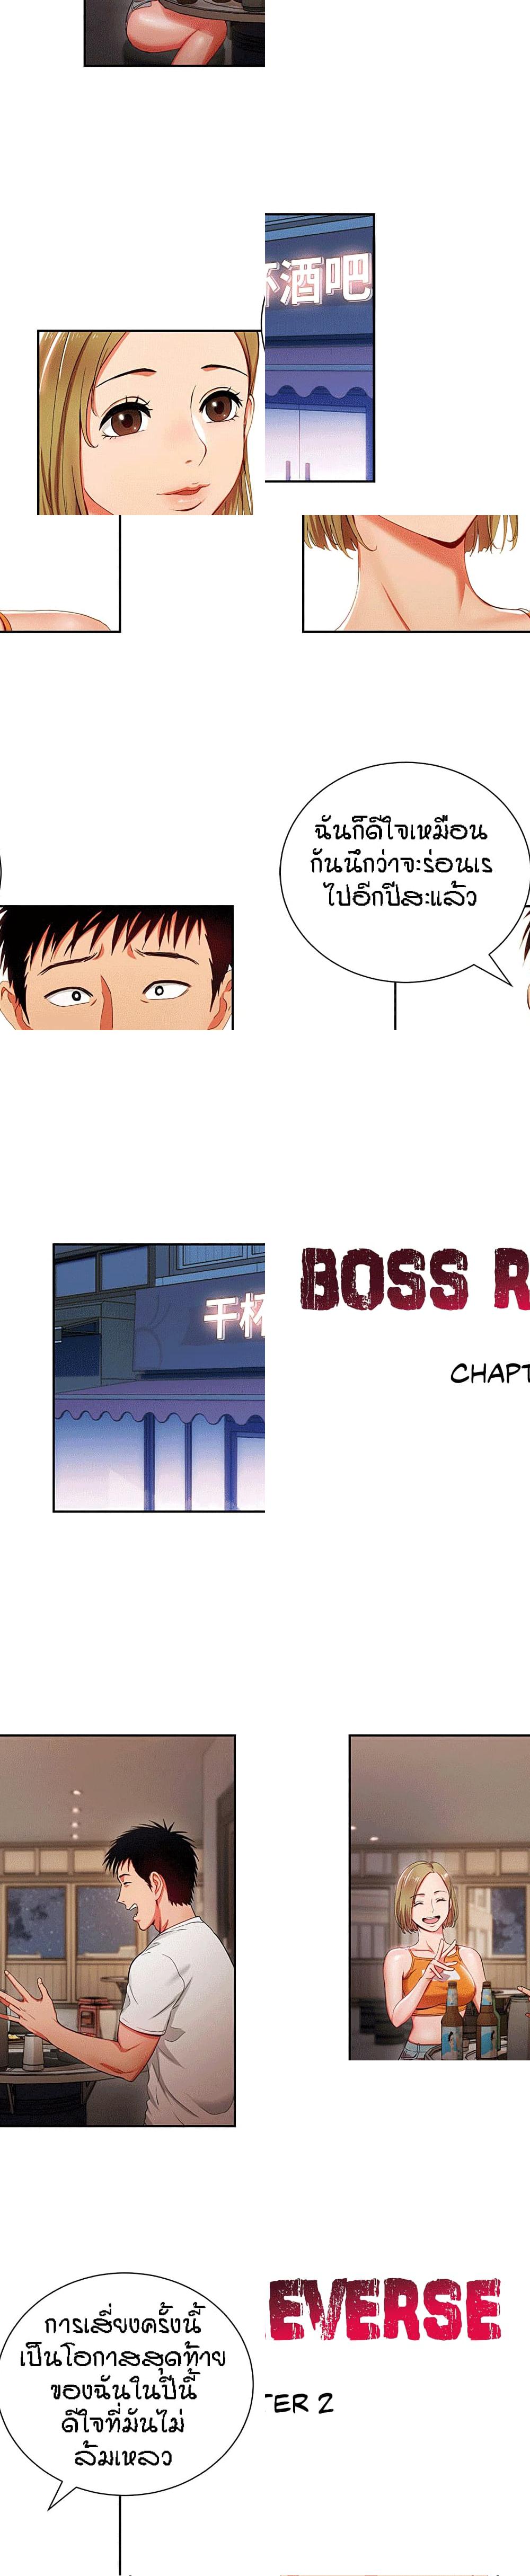 Boss Reverse - 2 - 2